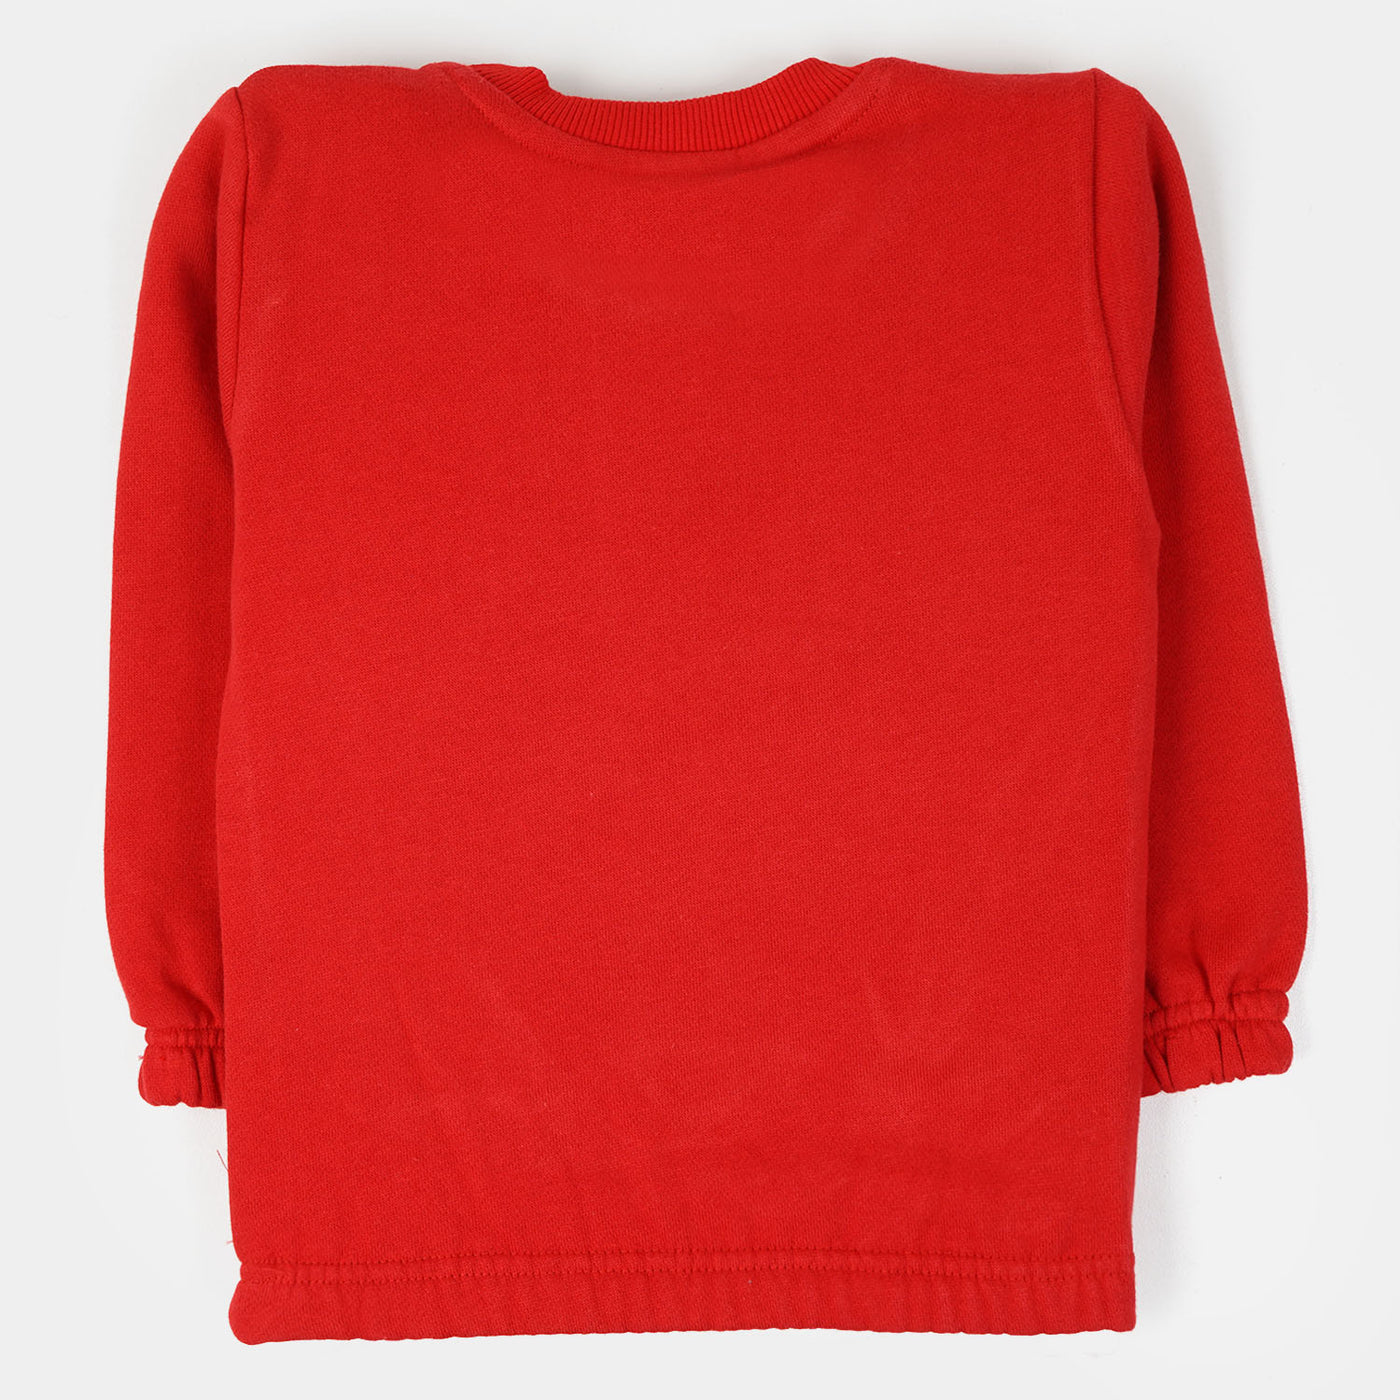 Girls Sweatshirt That's All Folks - Red